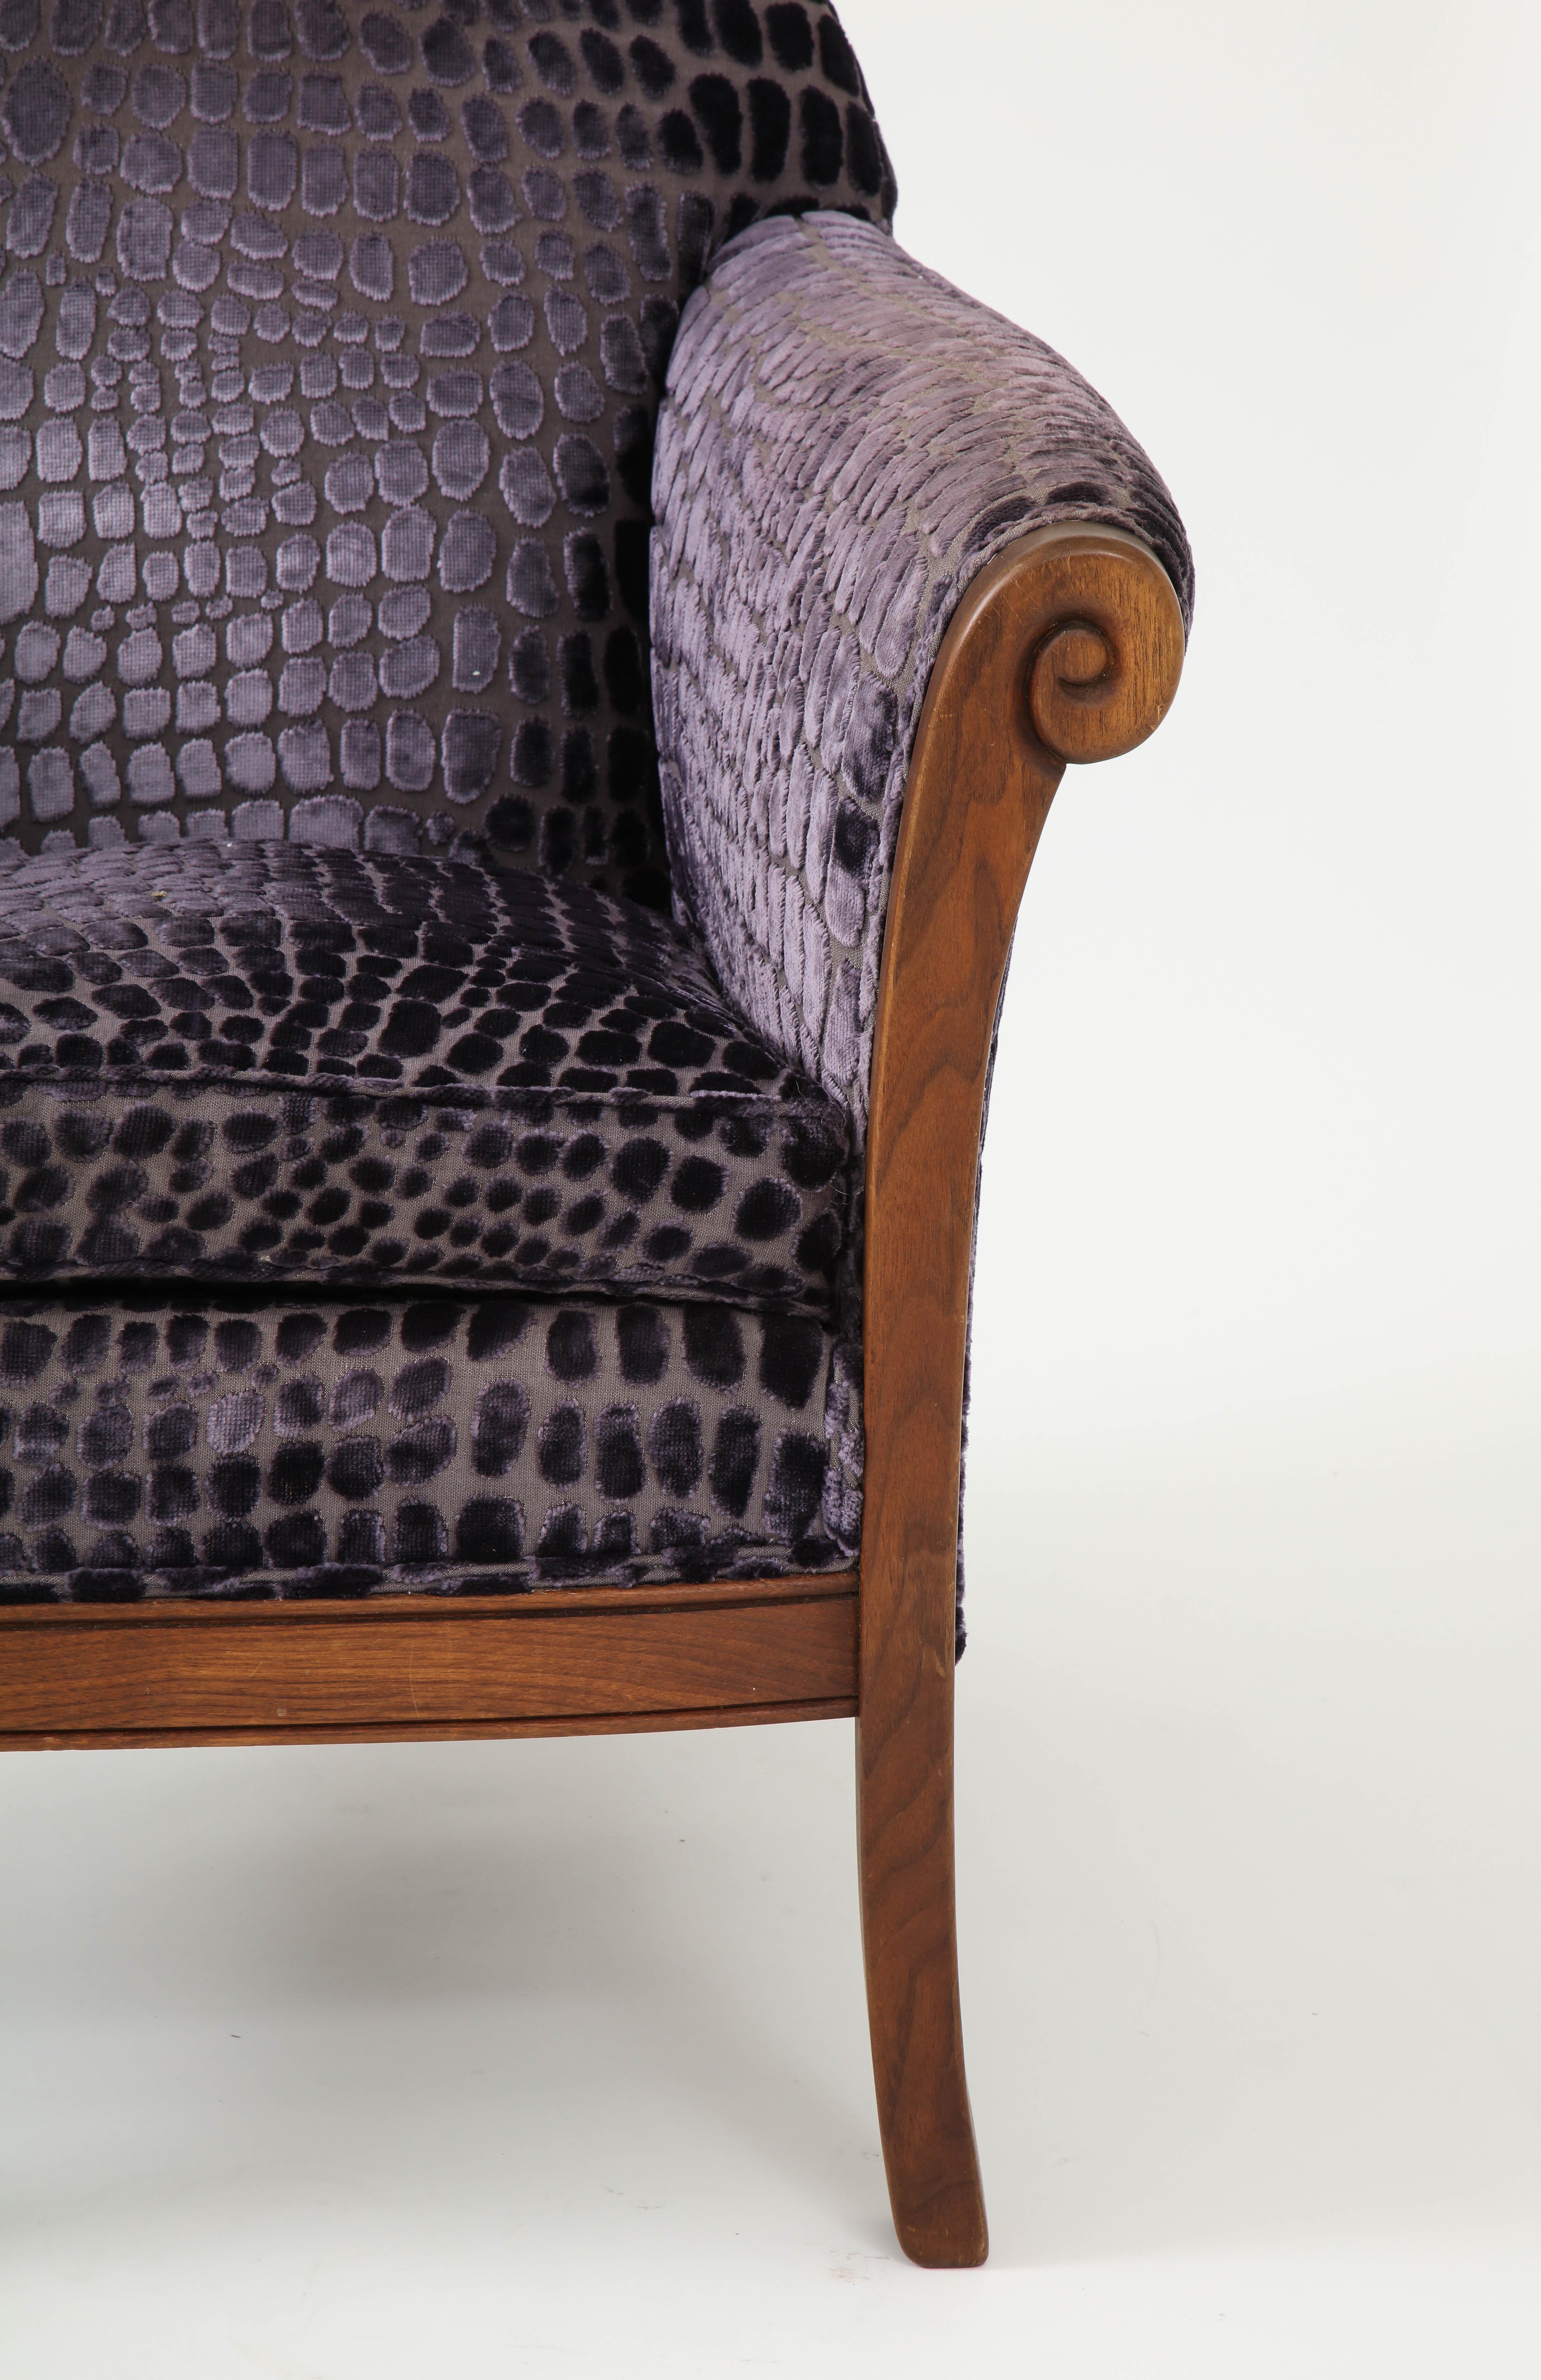 snakeskin chair